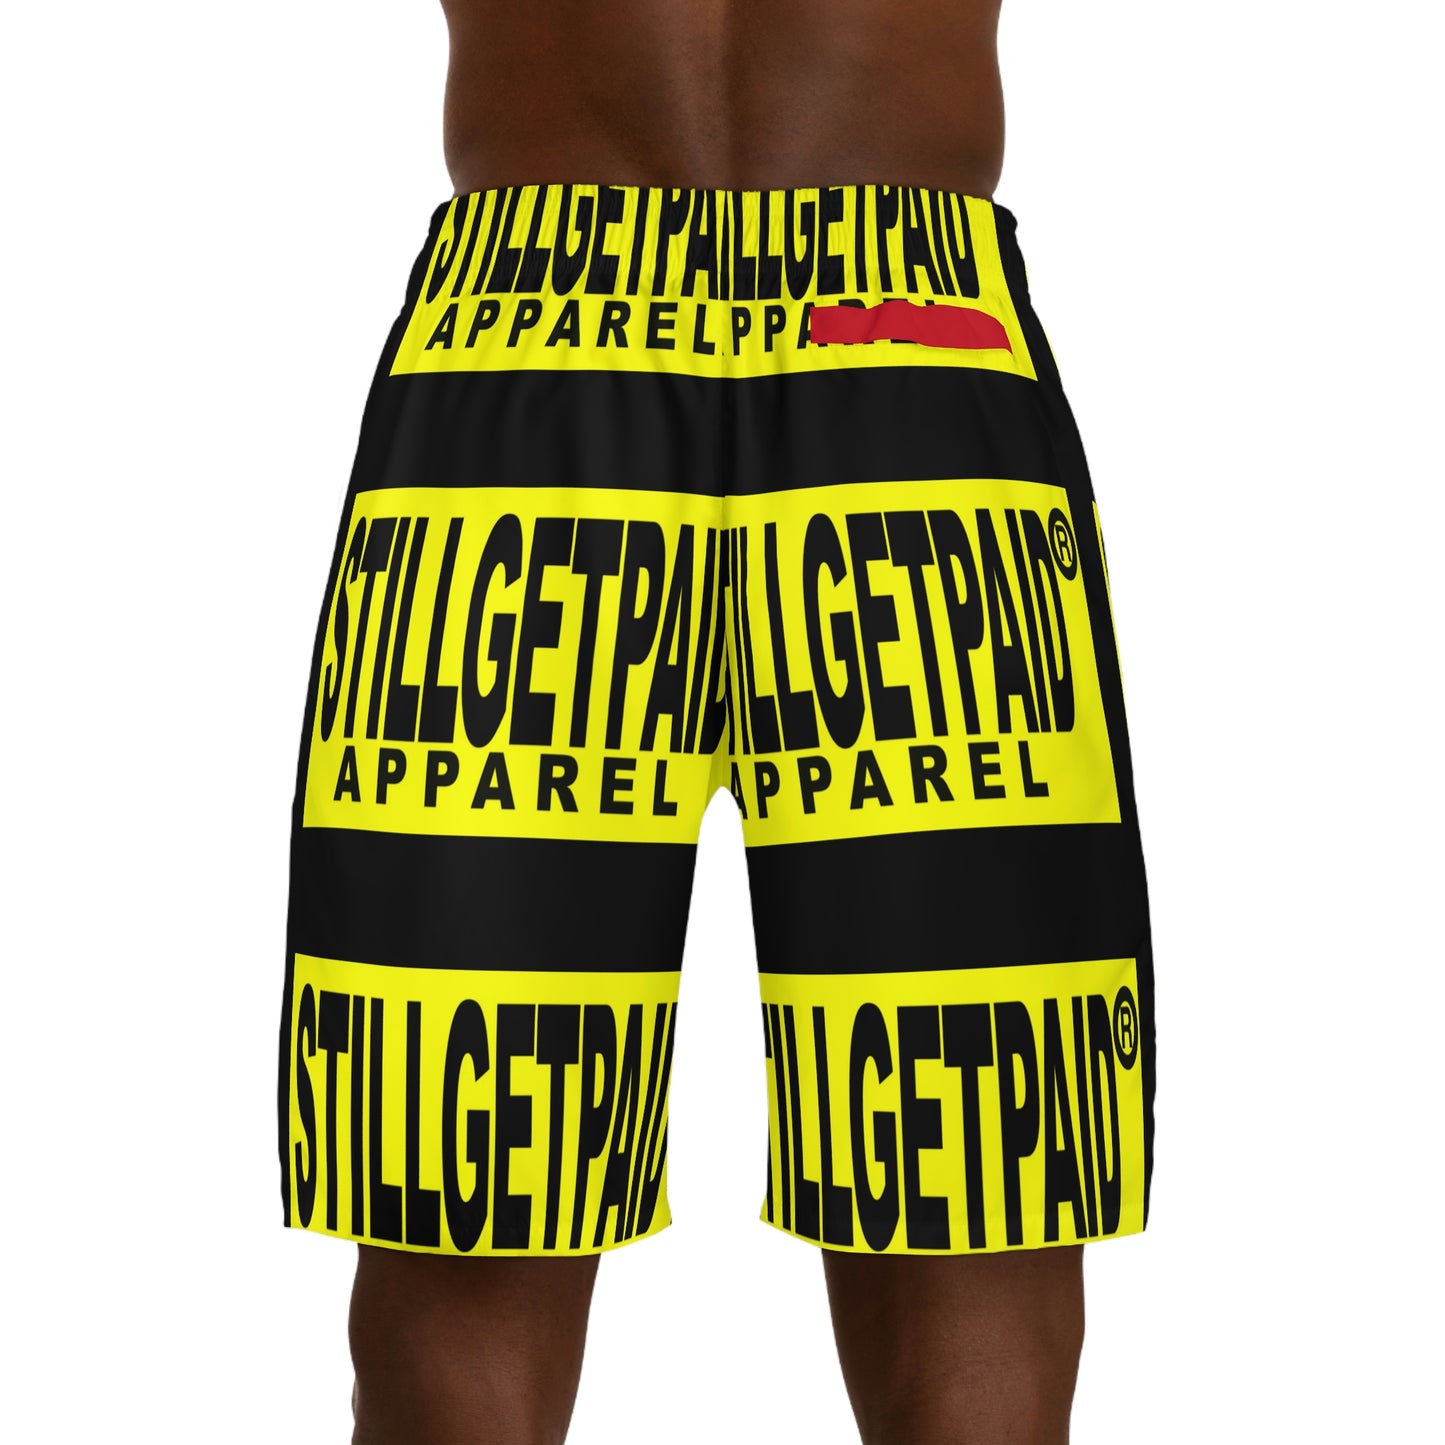 STILLGETPAID® APPAREL YELLOW Men's Jogger Shorts (AOP)